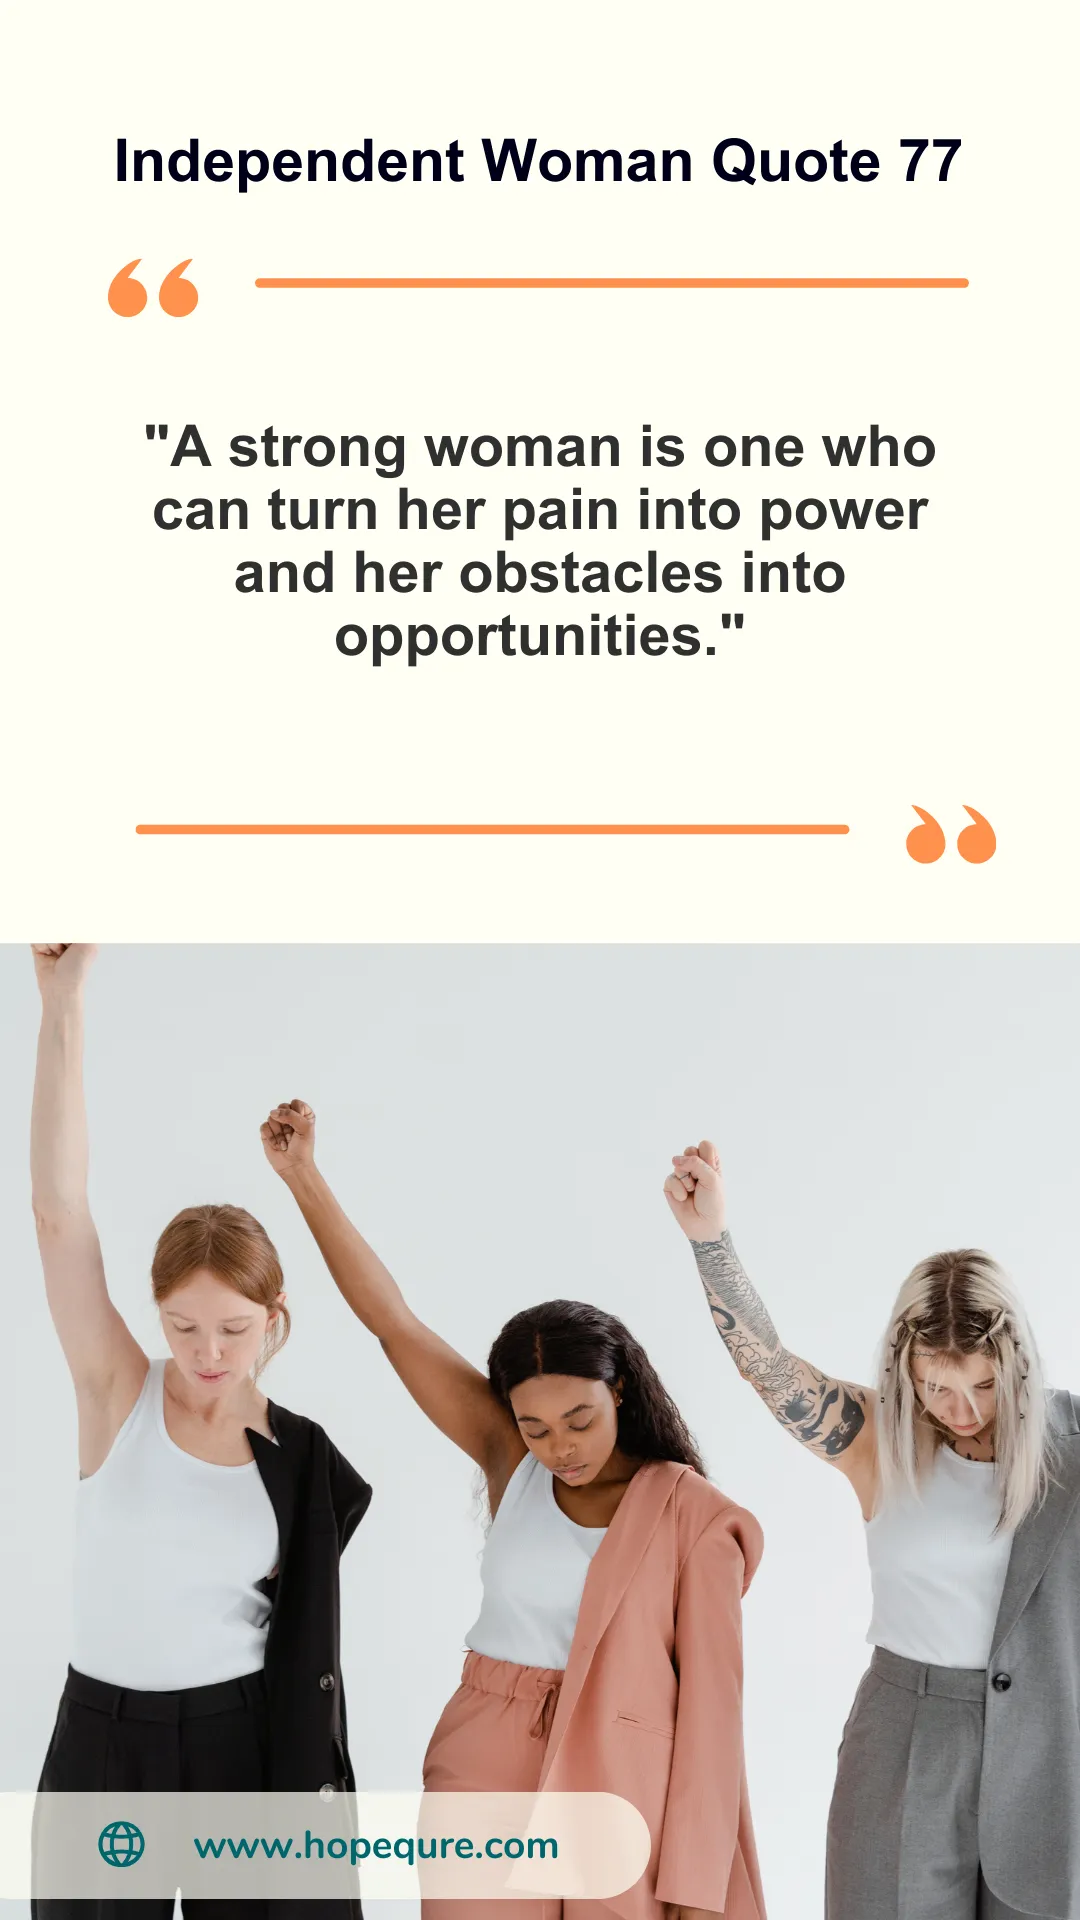 independent women quotes, mobile, wallpaper, woman status, women motivation